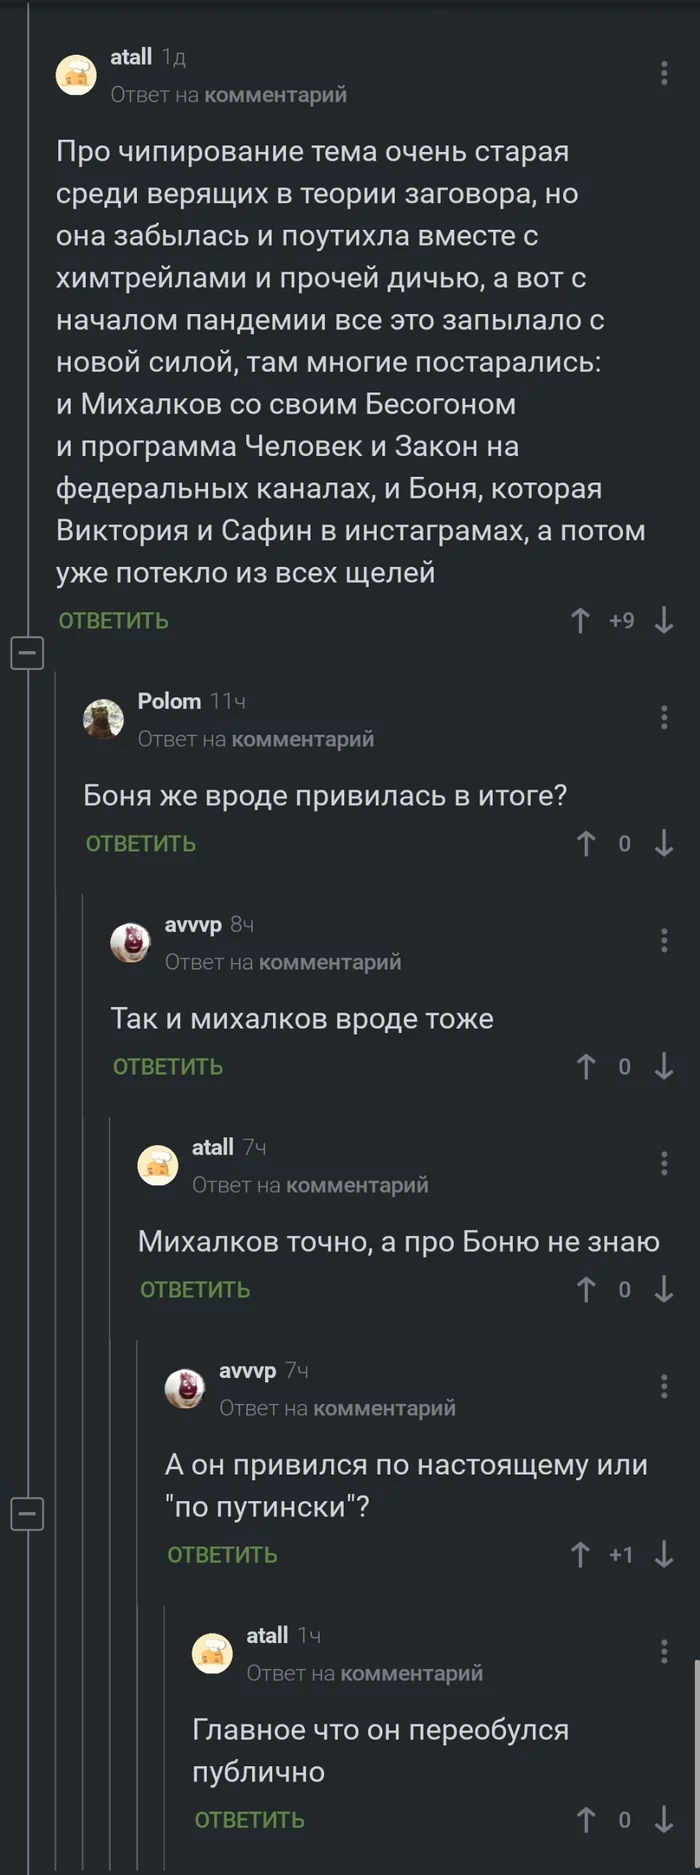 public change of shoes - Screenshot, Comments, Vladimir Putin, Mikhalkov, Coronavirus, Vaccination, Longpost